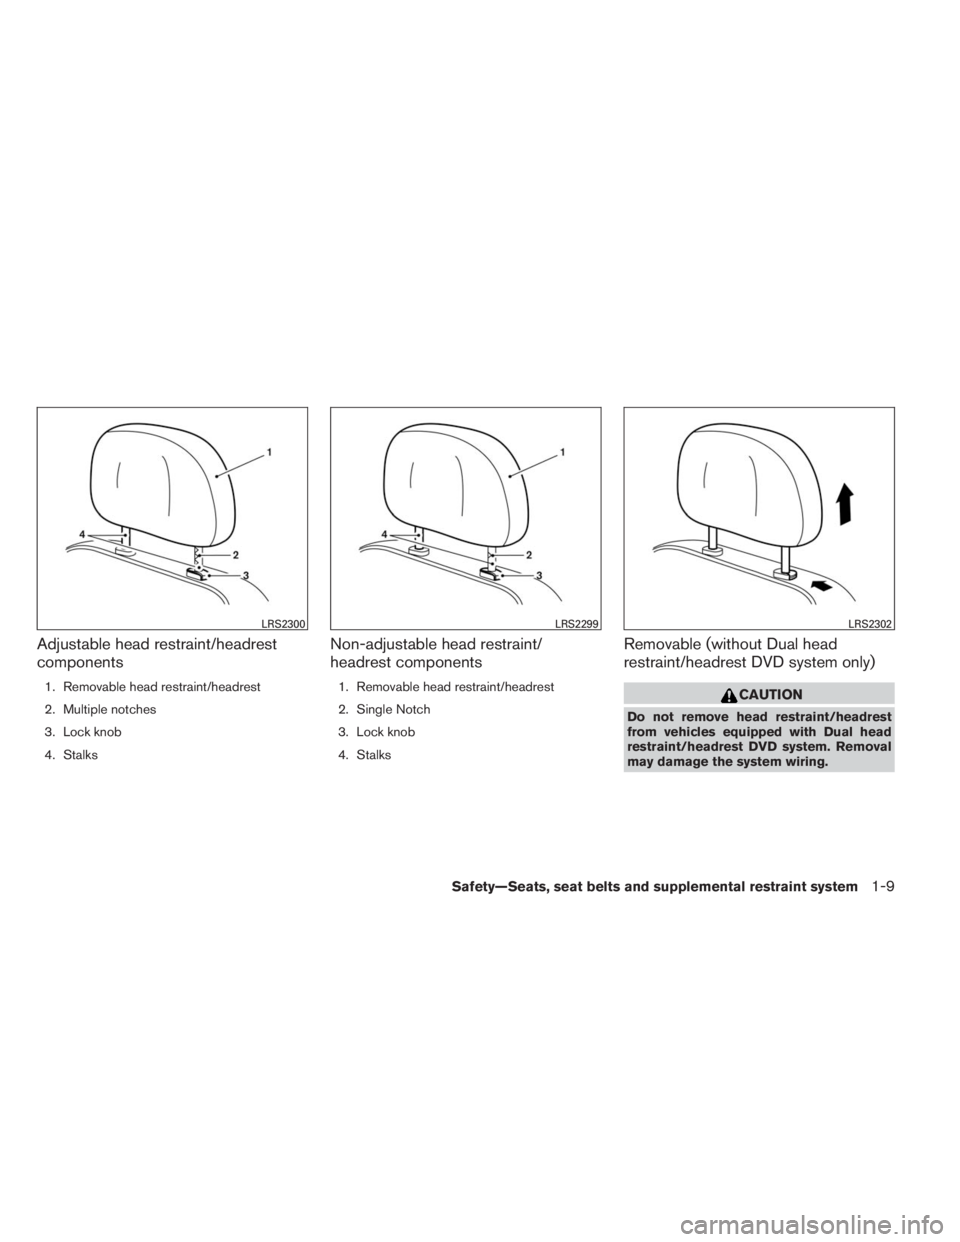 INFINITI QX60 HYBRID 2014  Owners Manual Adjustable head restraint/headrest
components
1. Removable head restraint/headrest
2. Multiple notches
3. Lock knob
4. Stalks
Non-adjustable head restraint/
headrest components
1. Removable head restr